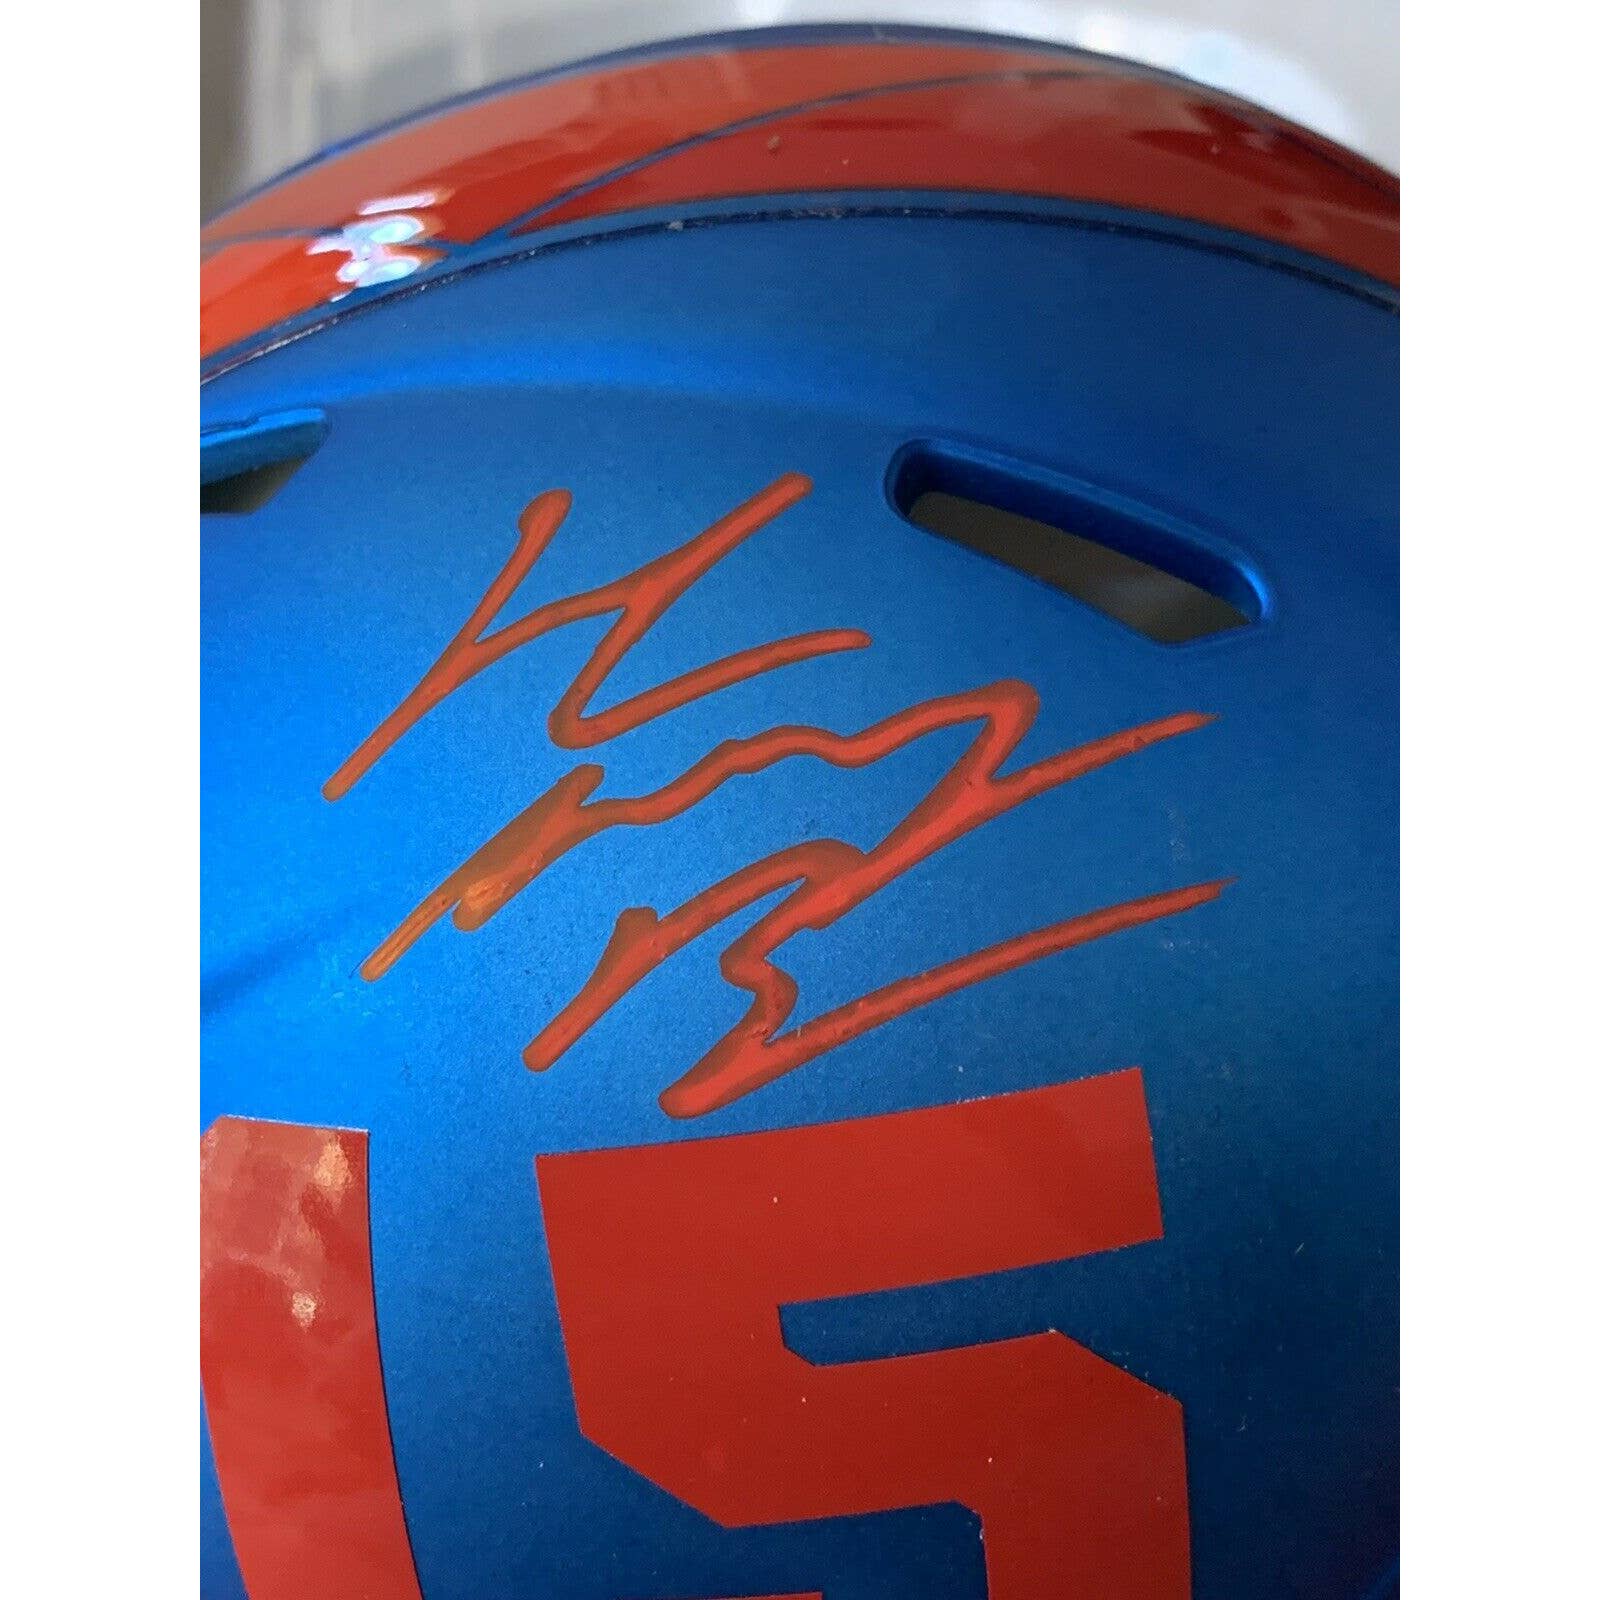 John Brown Autographed/Signed Mini Helmet Beckett COA Buffalo Bills B - TreasuresEvolved